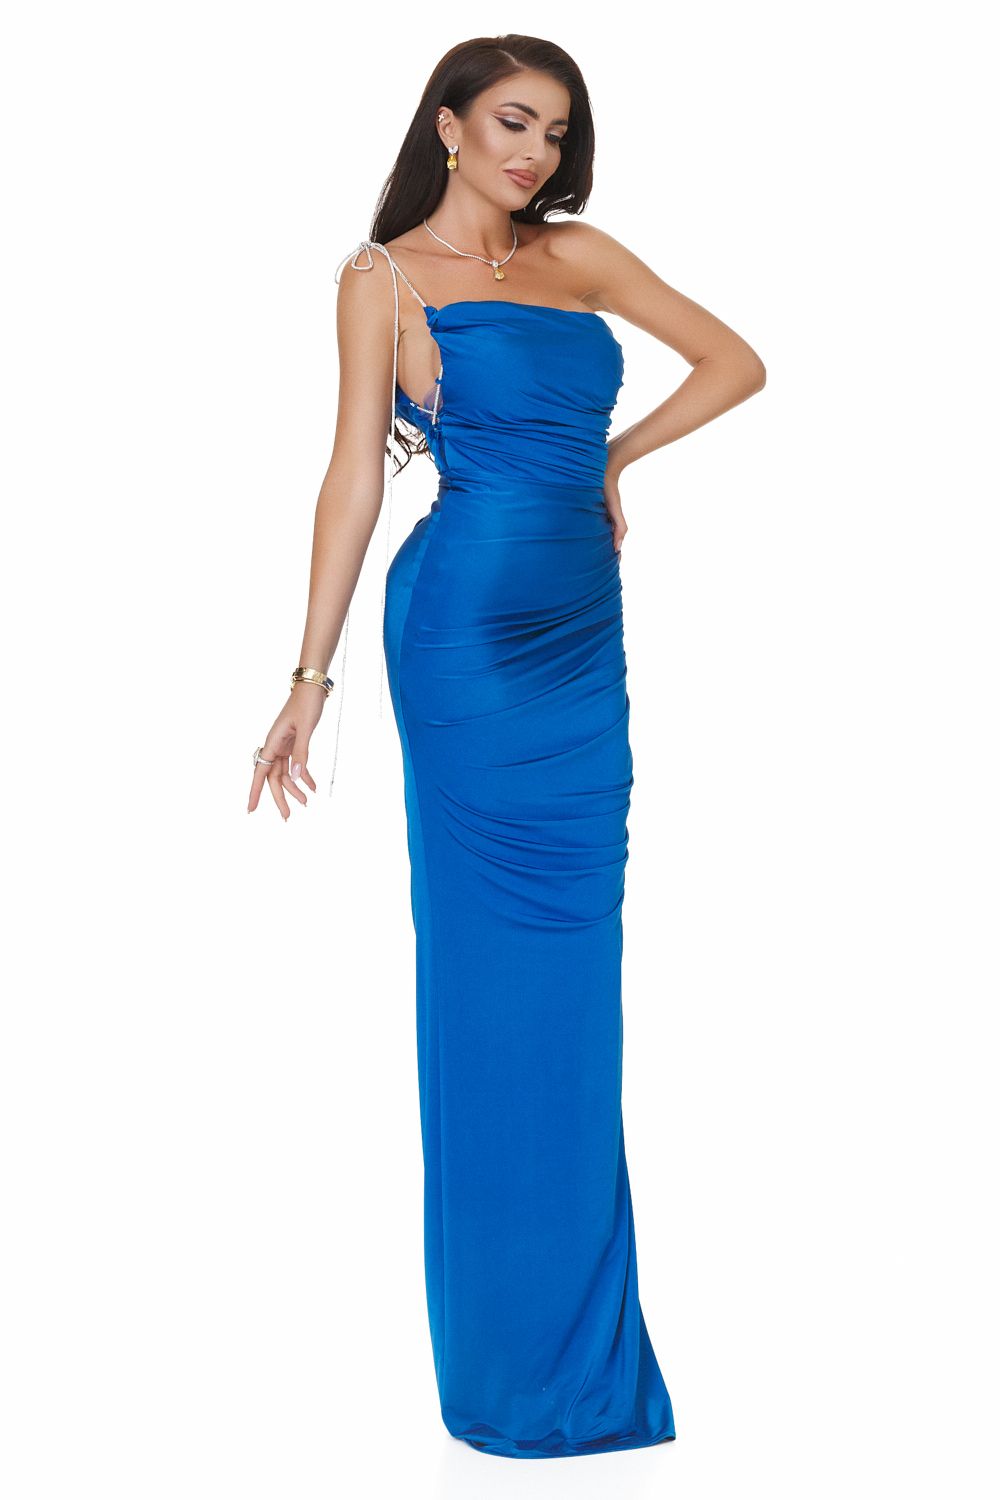 Gigasy Bogas hosszú kék női ruha